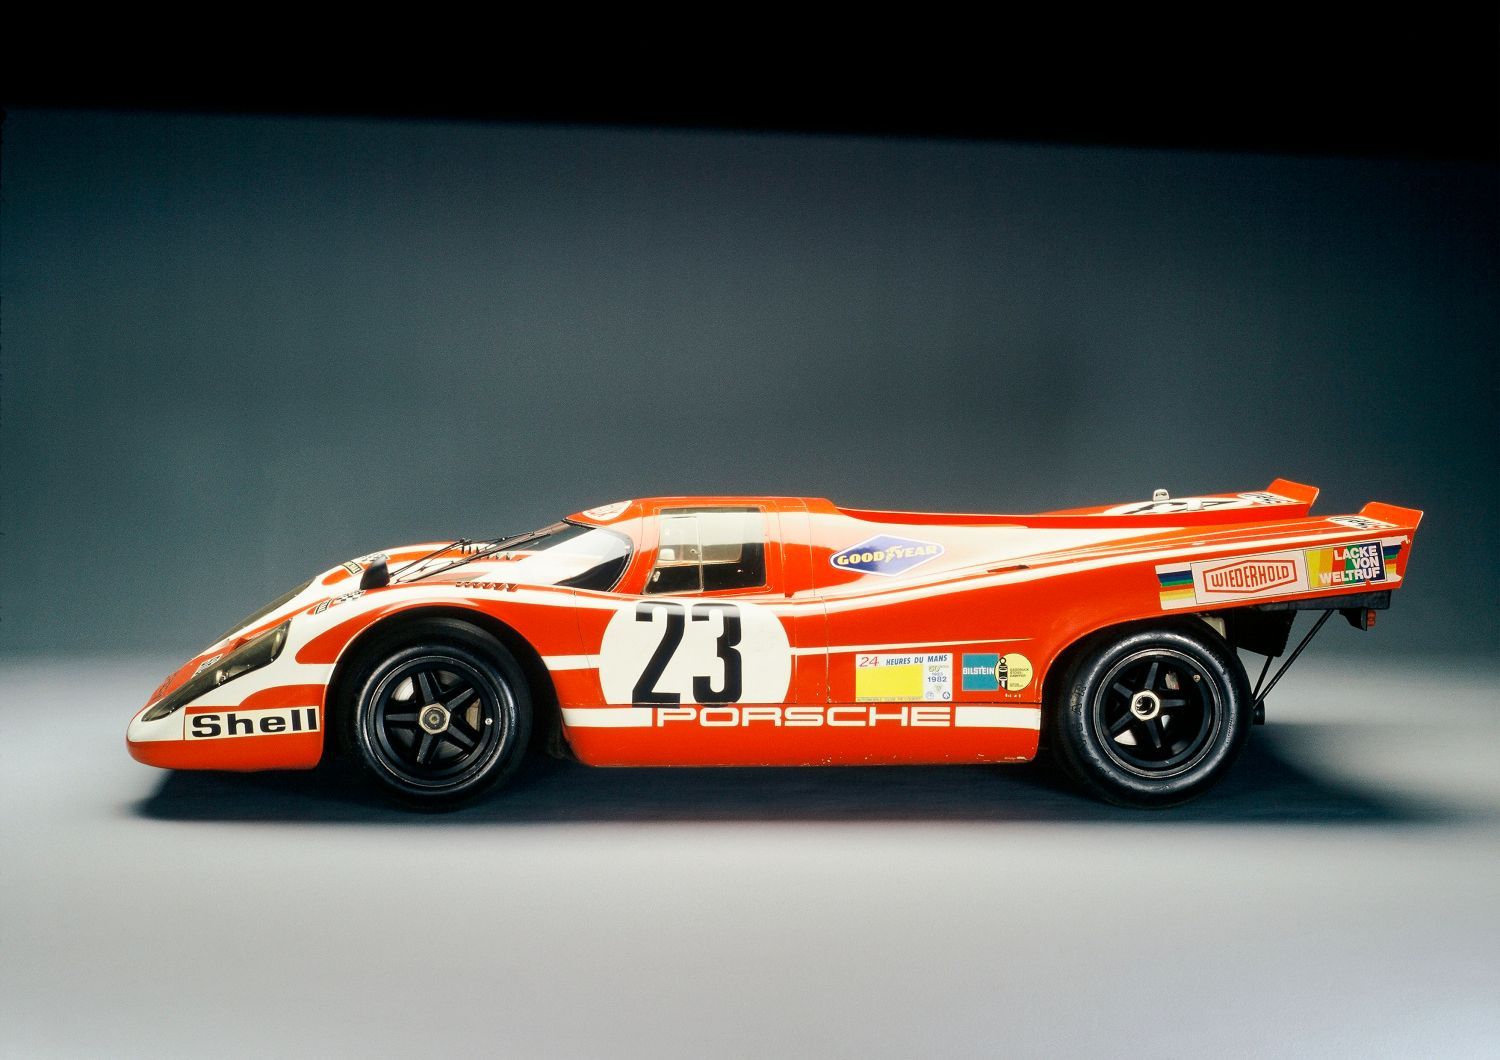 Závodní historie Porsche: Porsche 917, Le Mans 1970